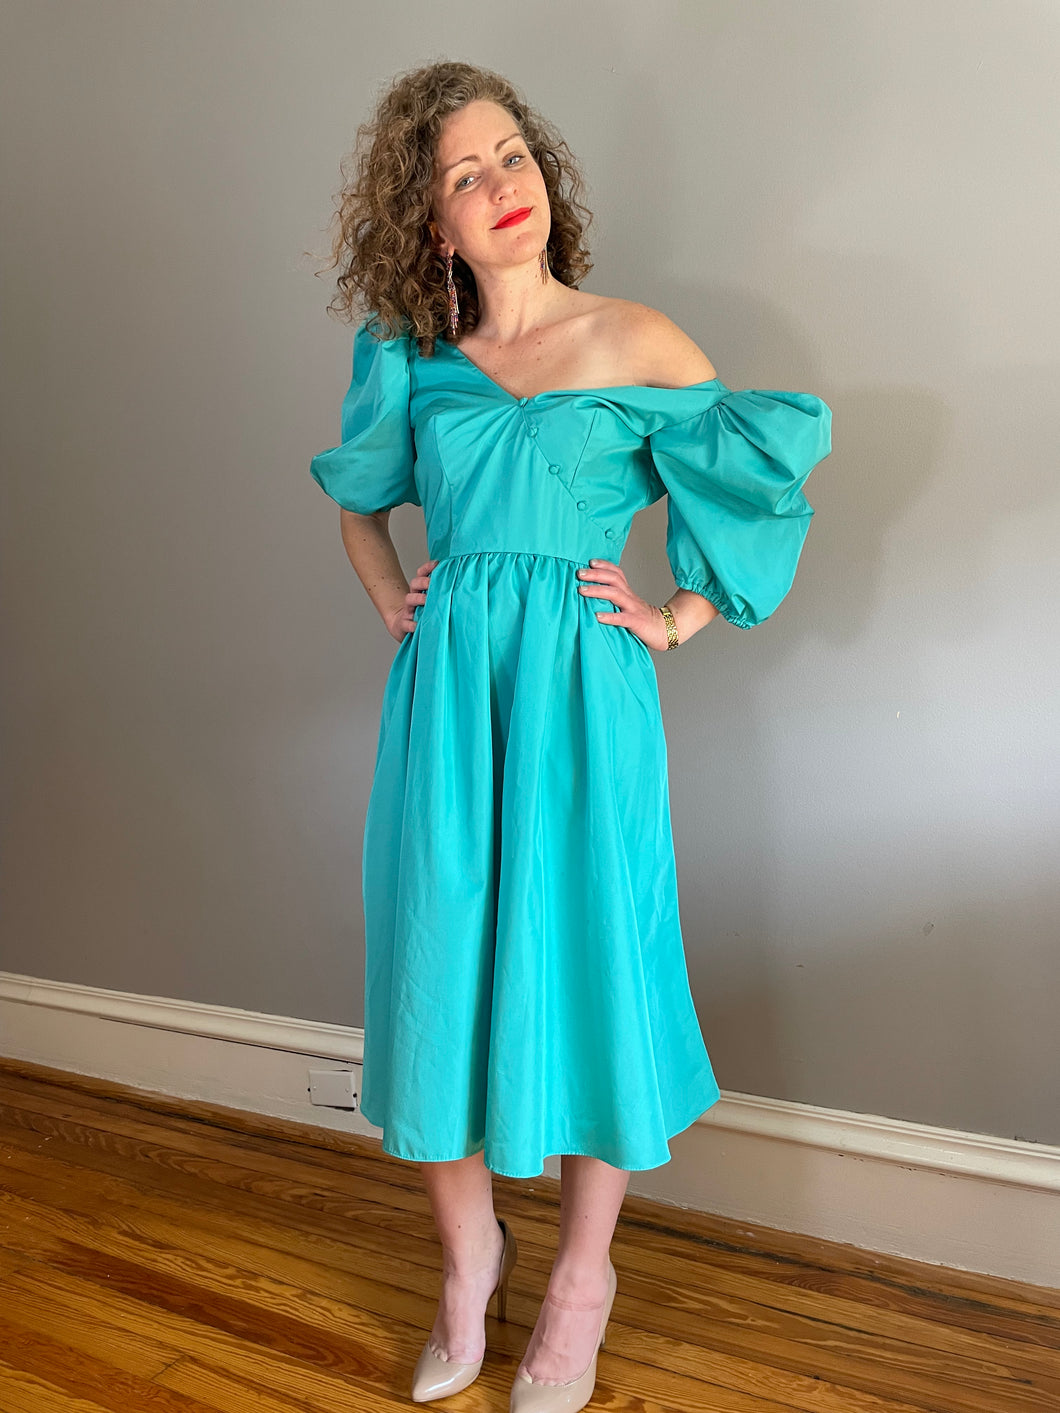 80s Party Dress (Small/Medium)